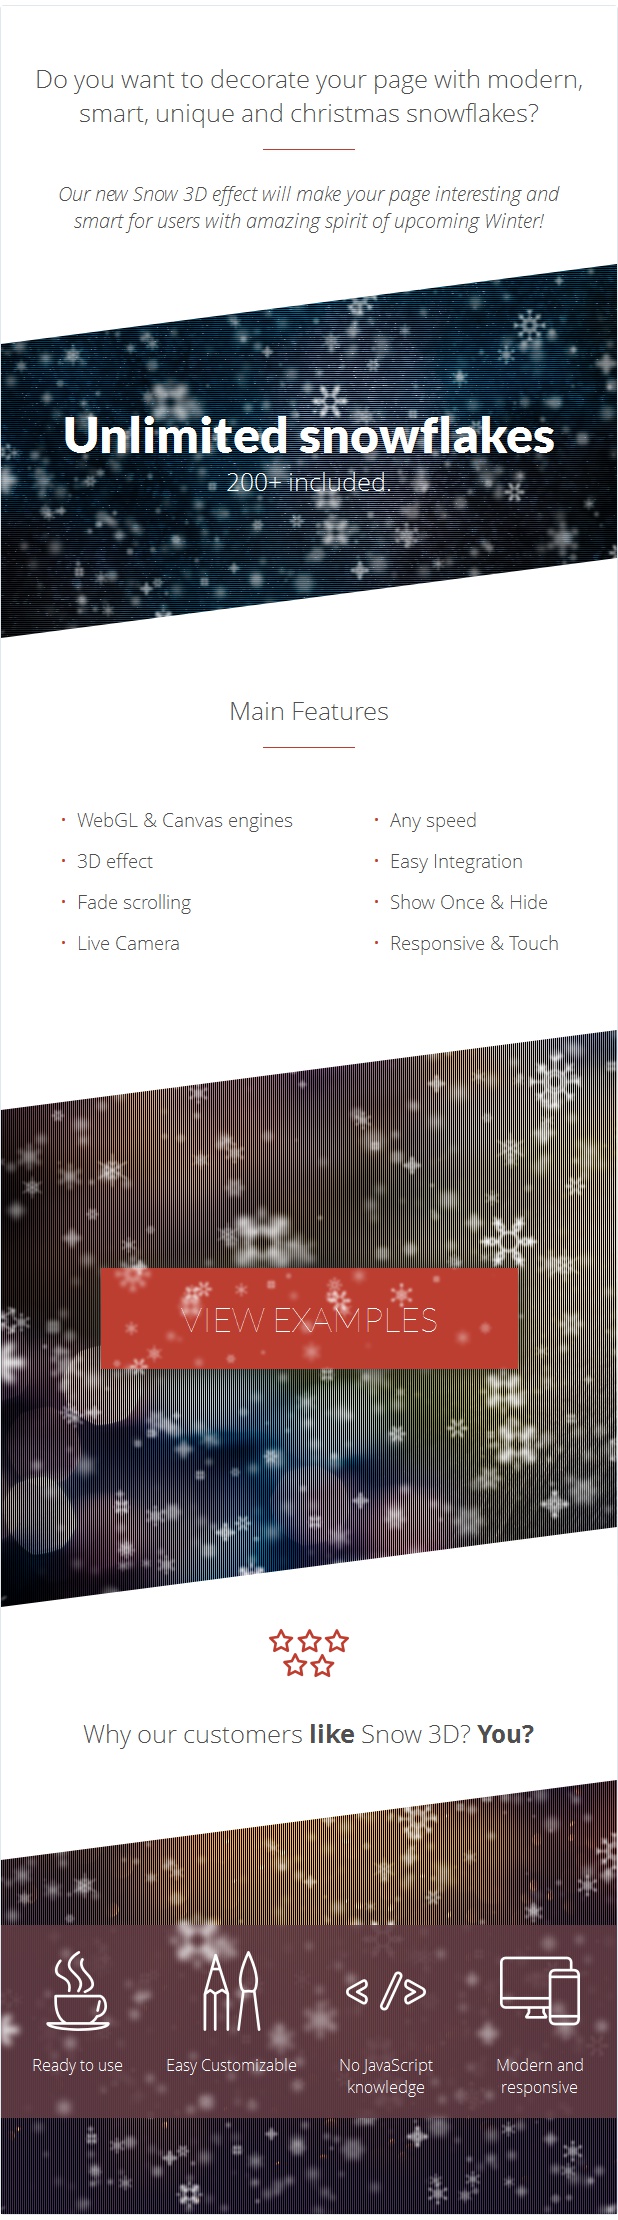 Snow 3D - Christmas Plugin for WordPress - 4